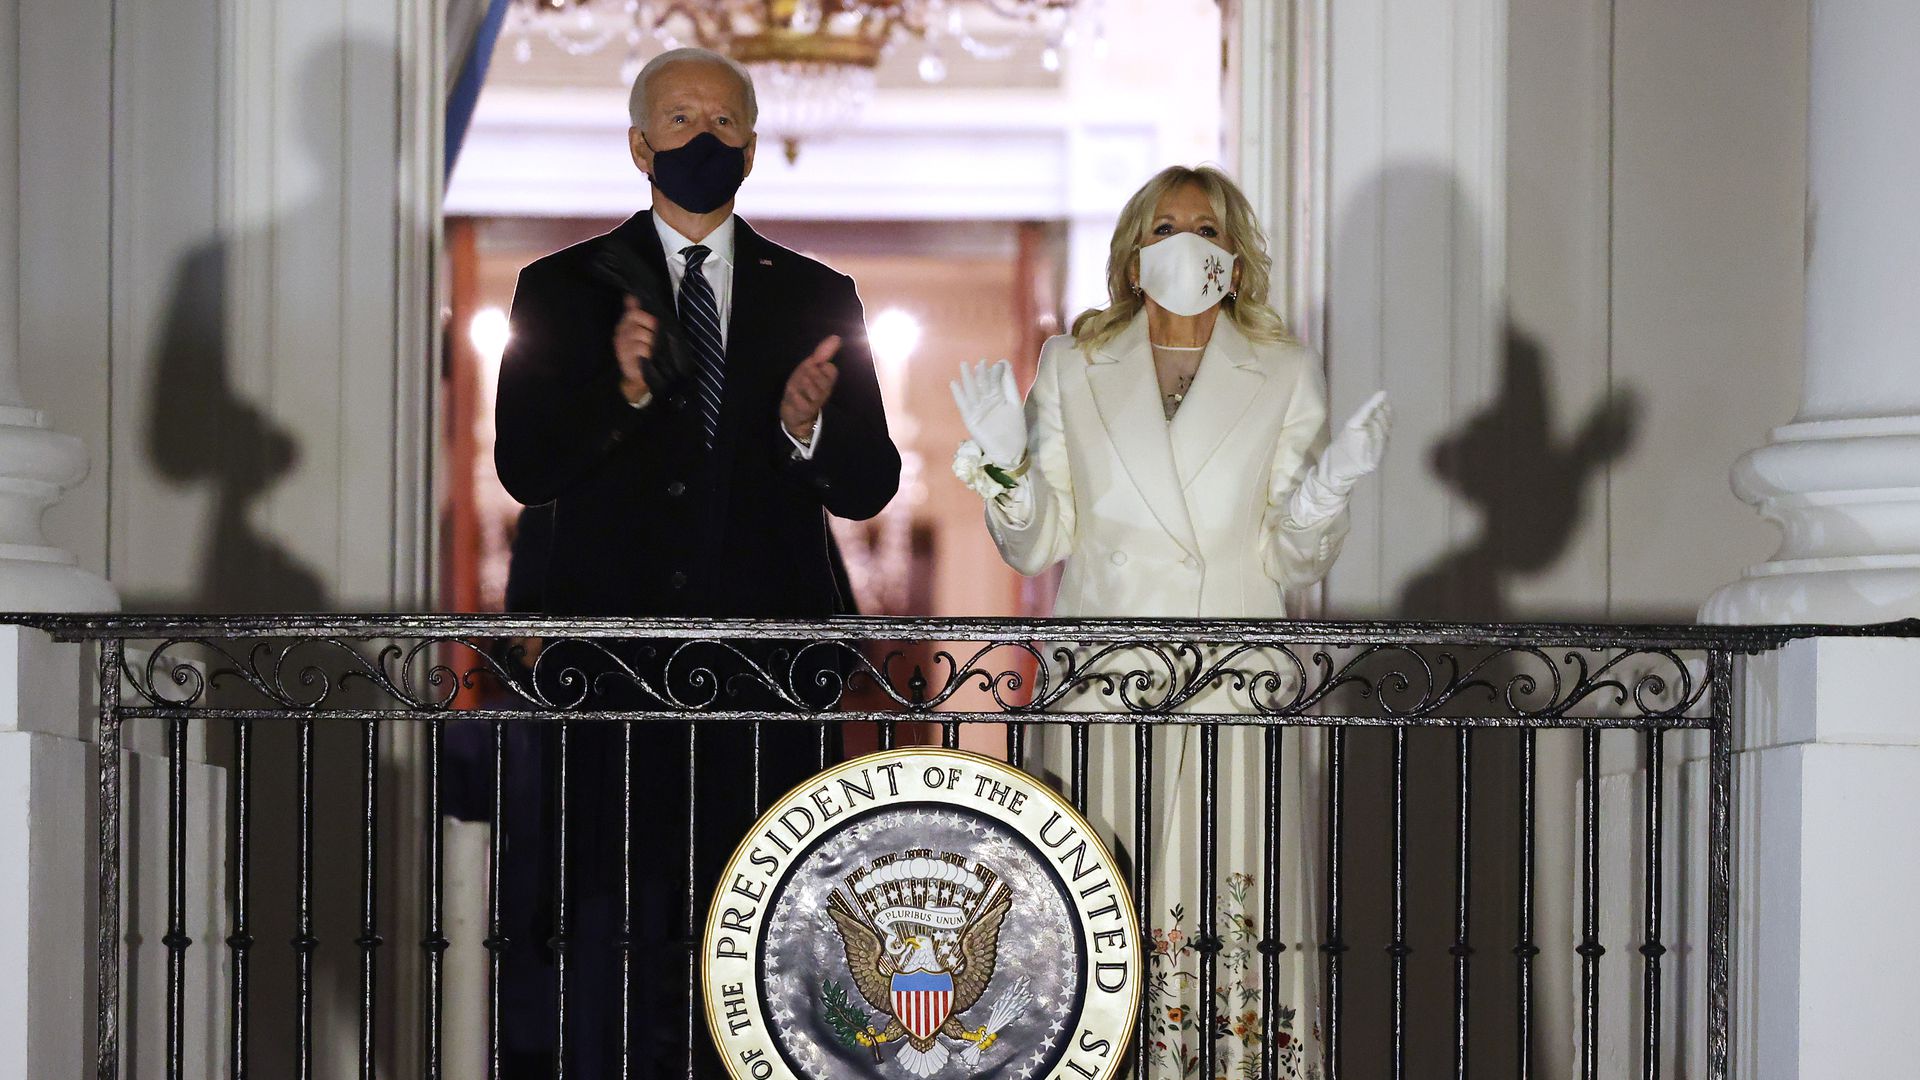 In photo: The Biden and Harris inauguration